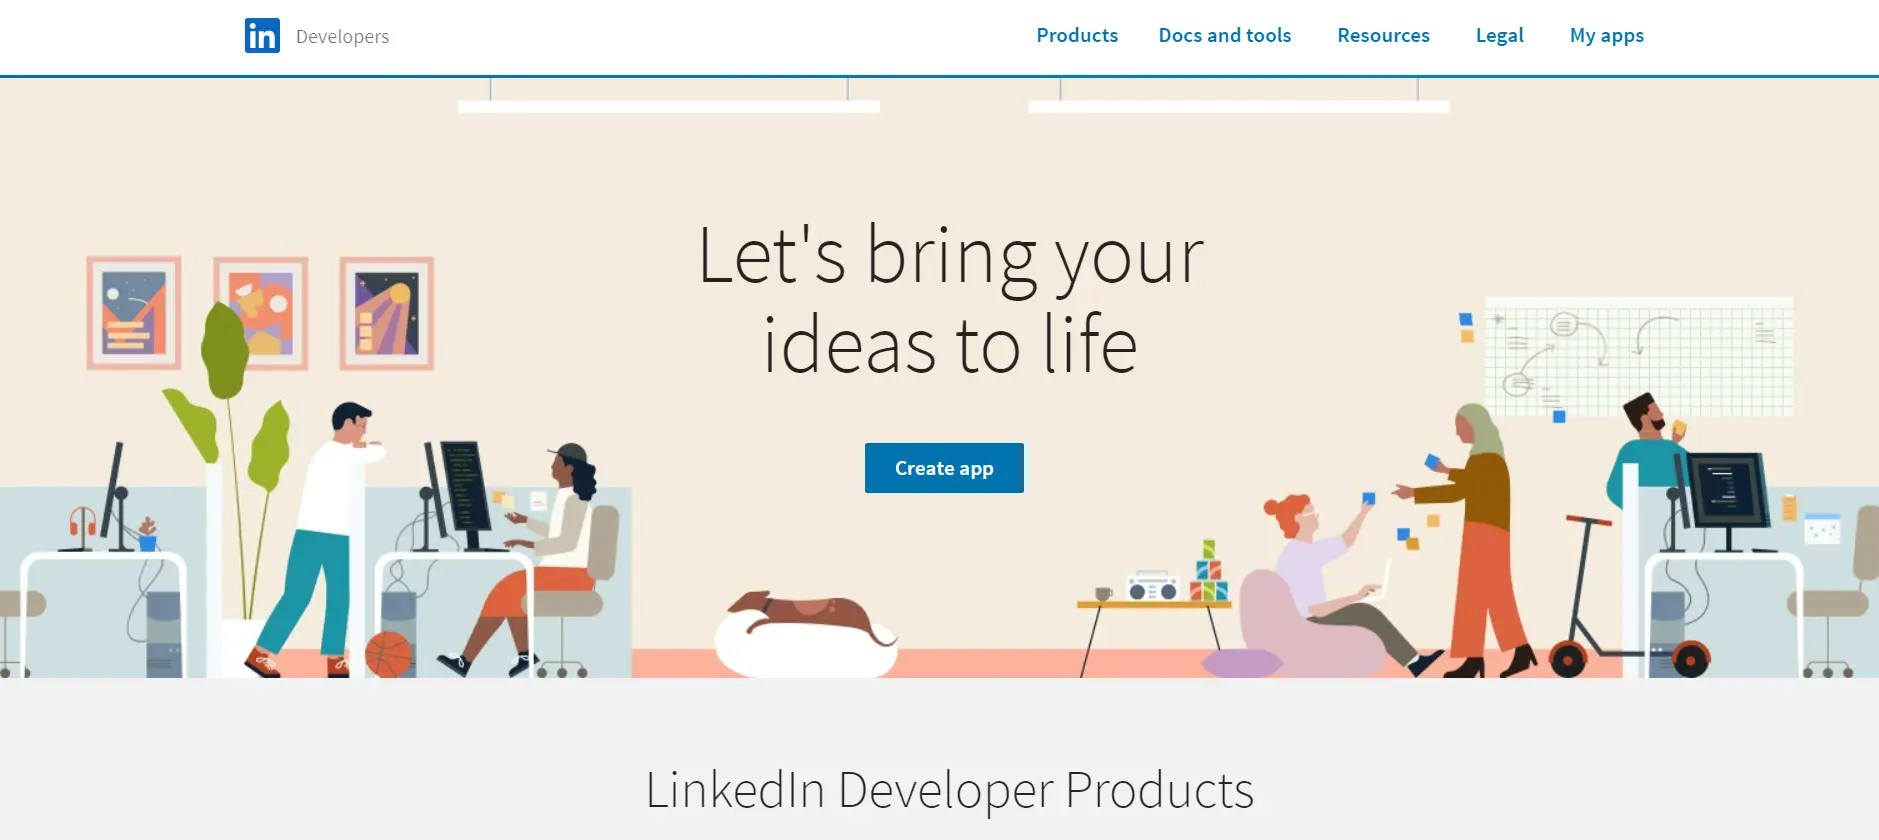 AngularJSSSO LinkedIn: Create-application